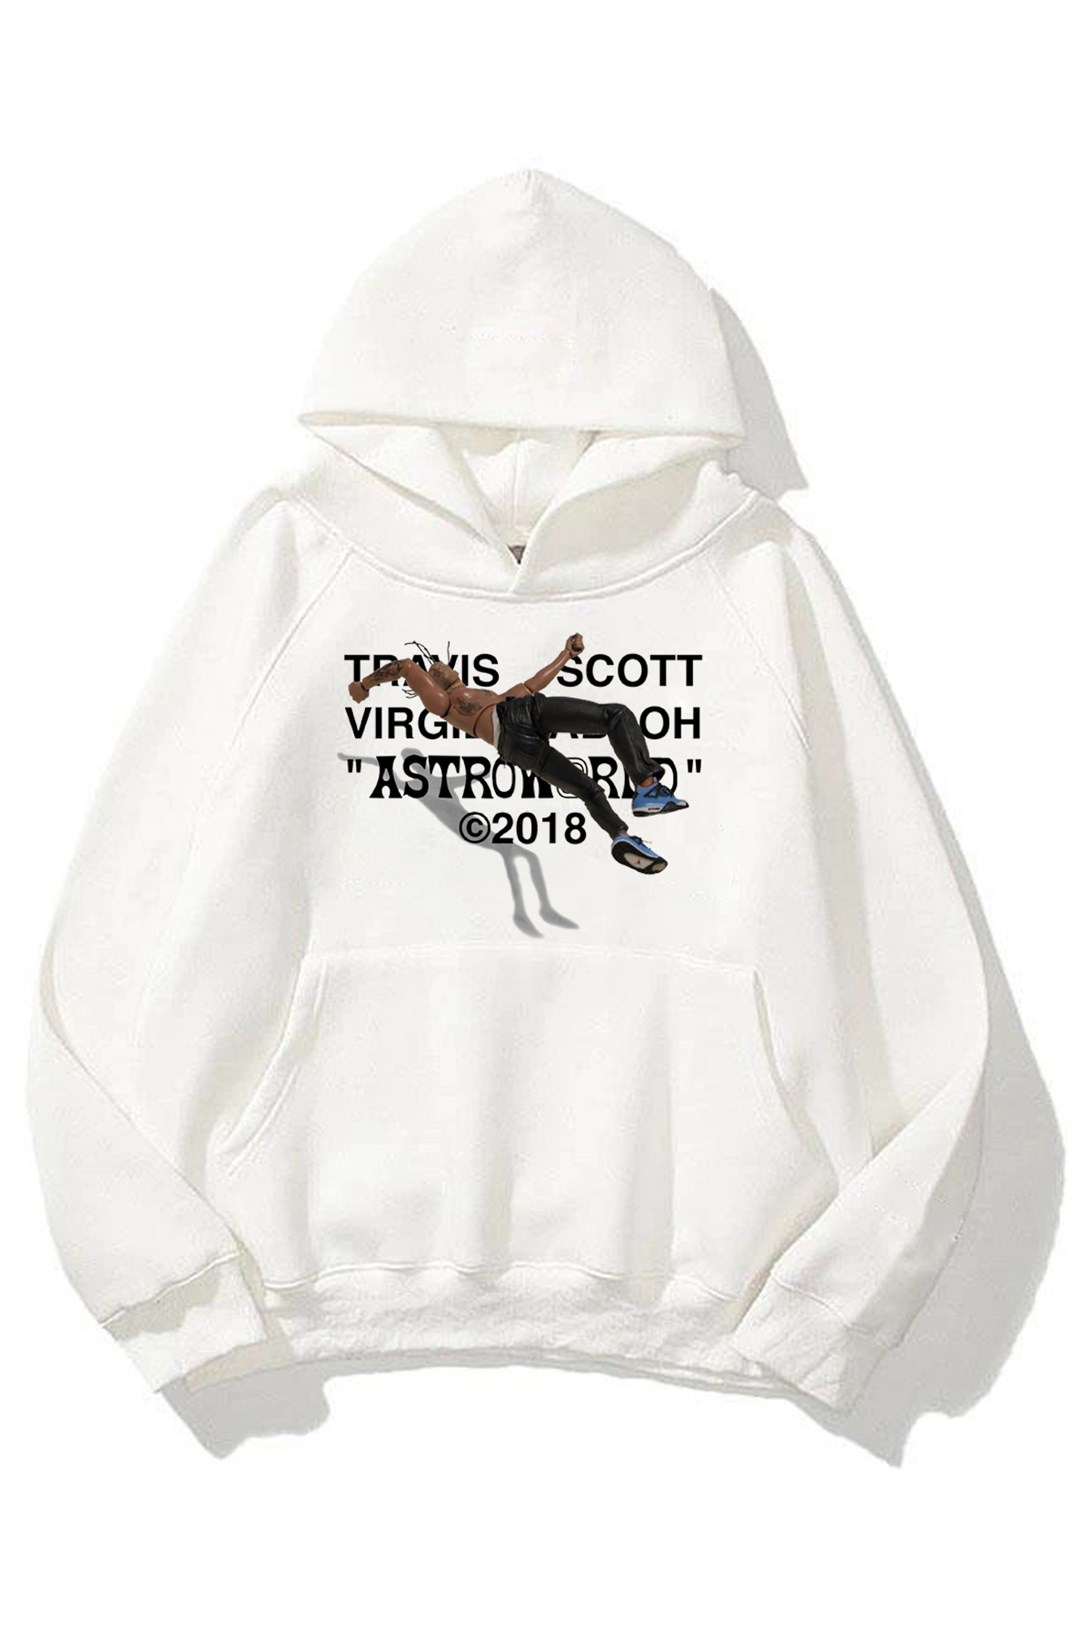 Trendiz Travis Scott Astroworld 2018 Unisex Sweatshirt